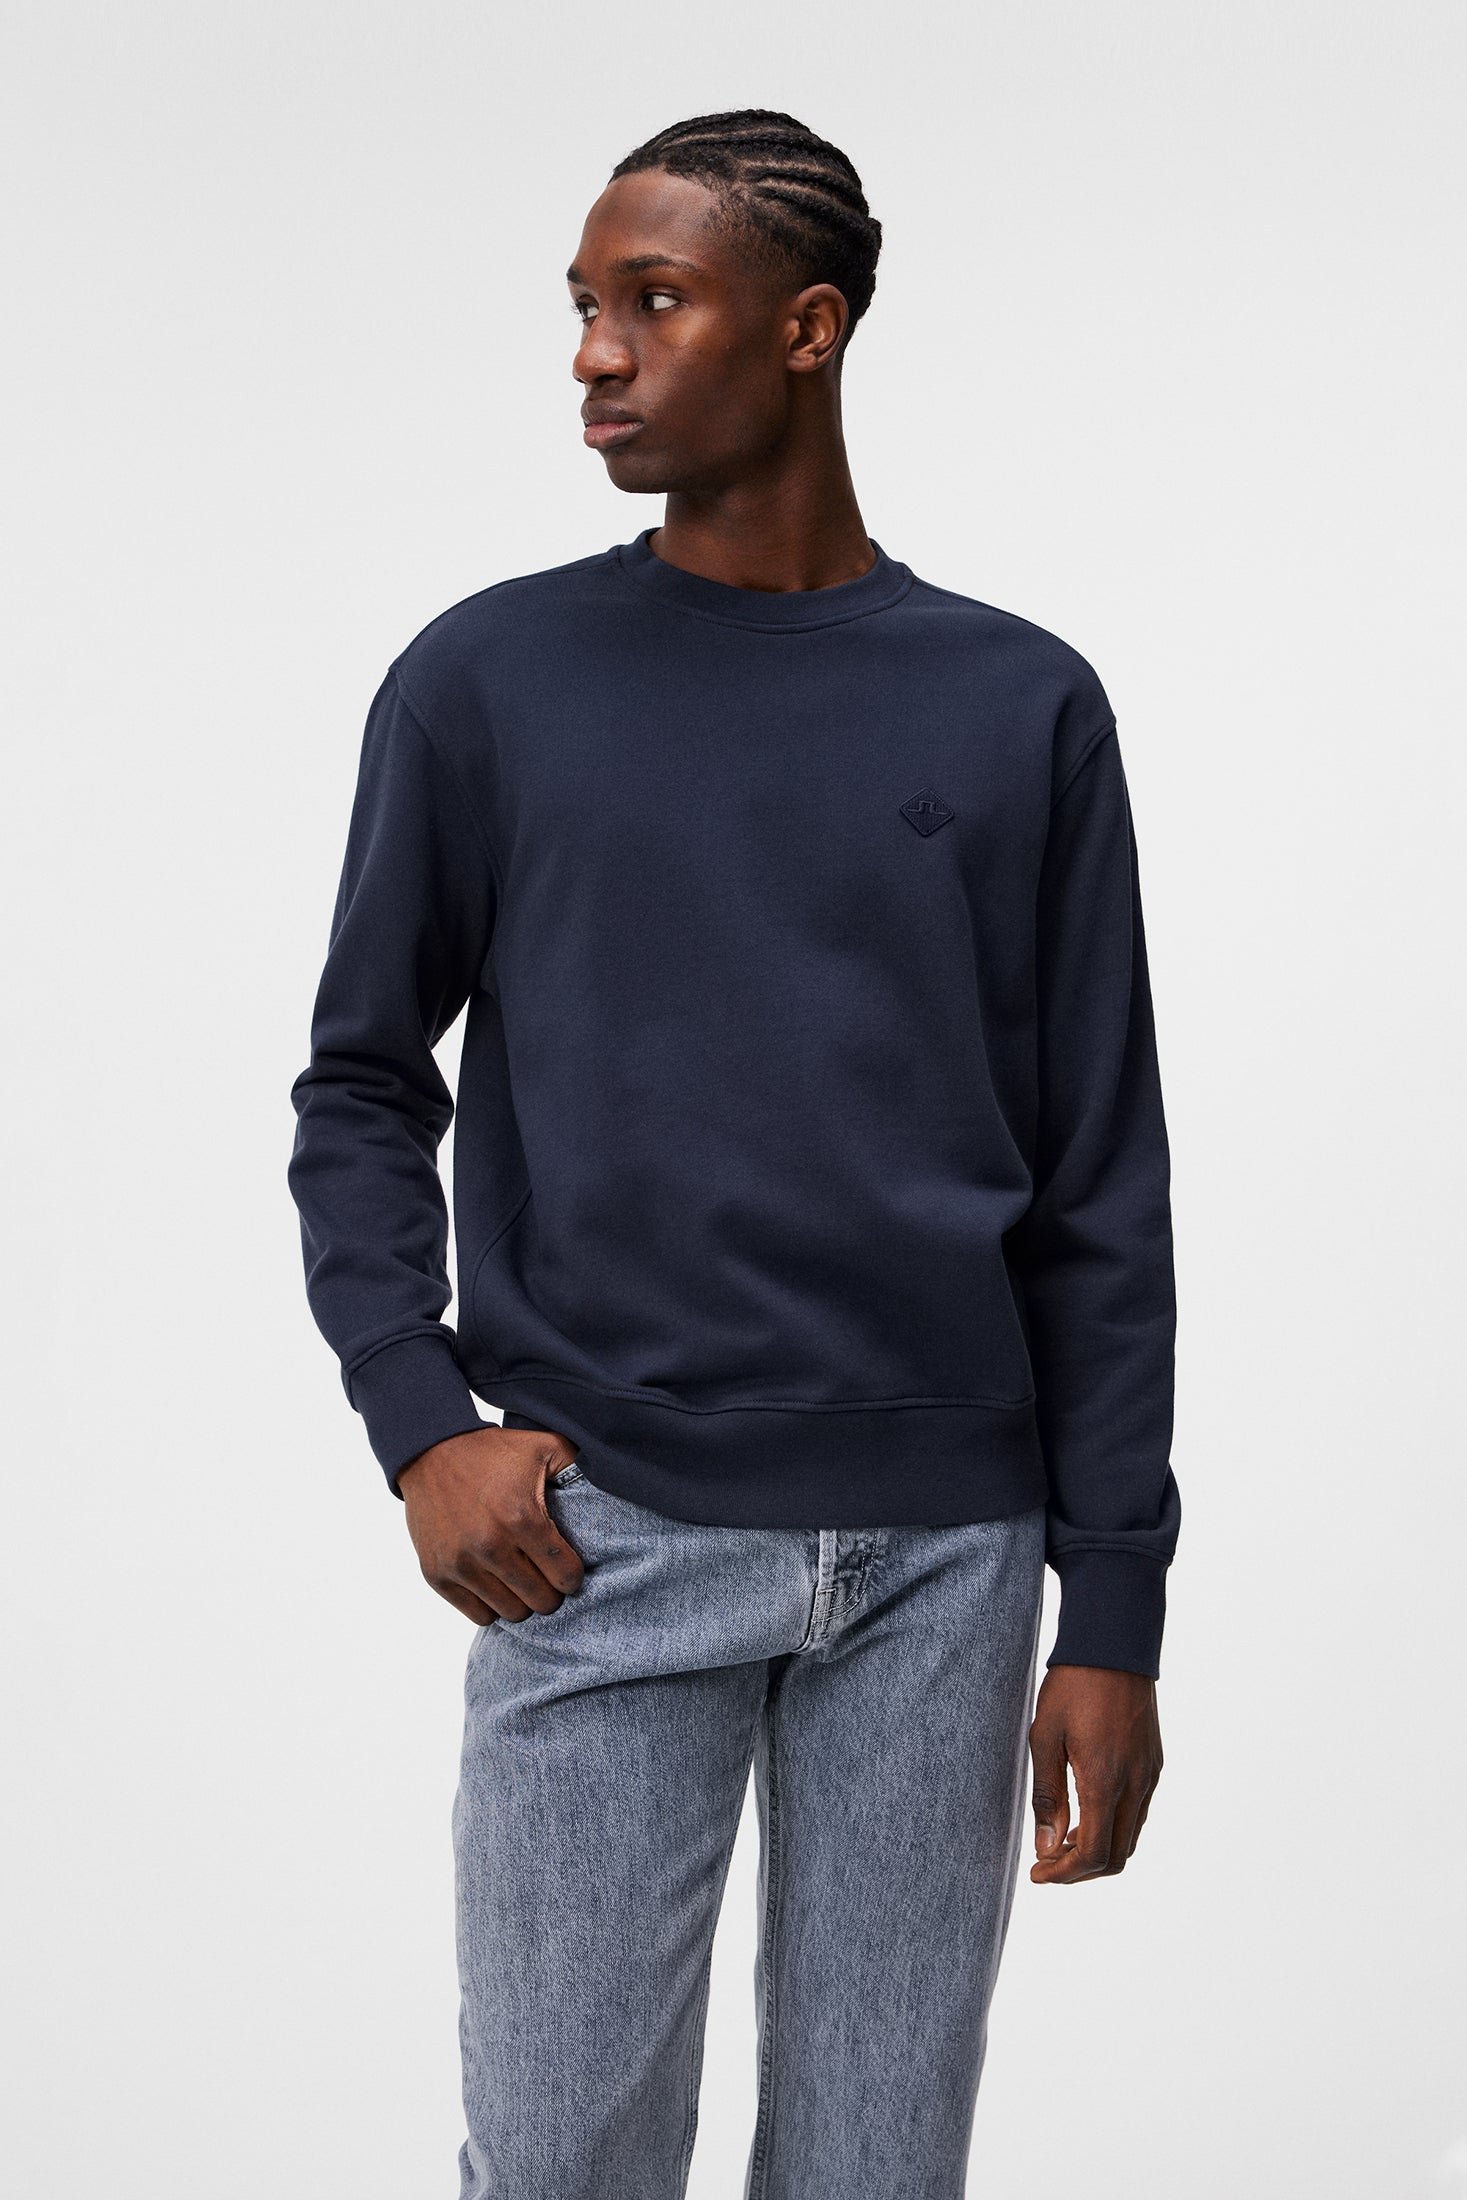 Comfortable Sweatshirts for Men - J.Lindeberg